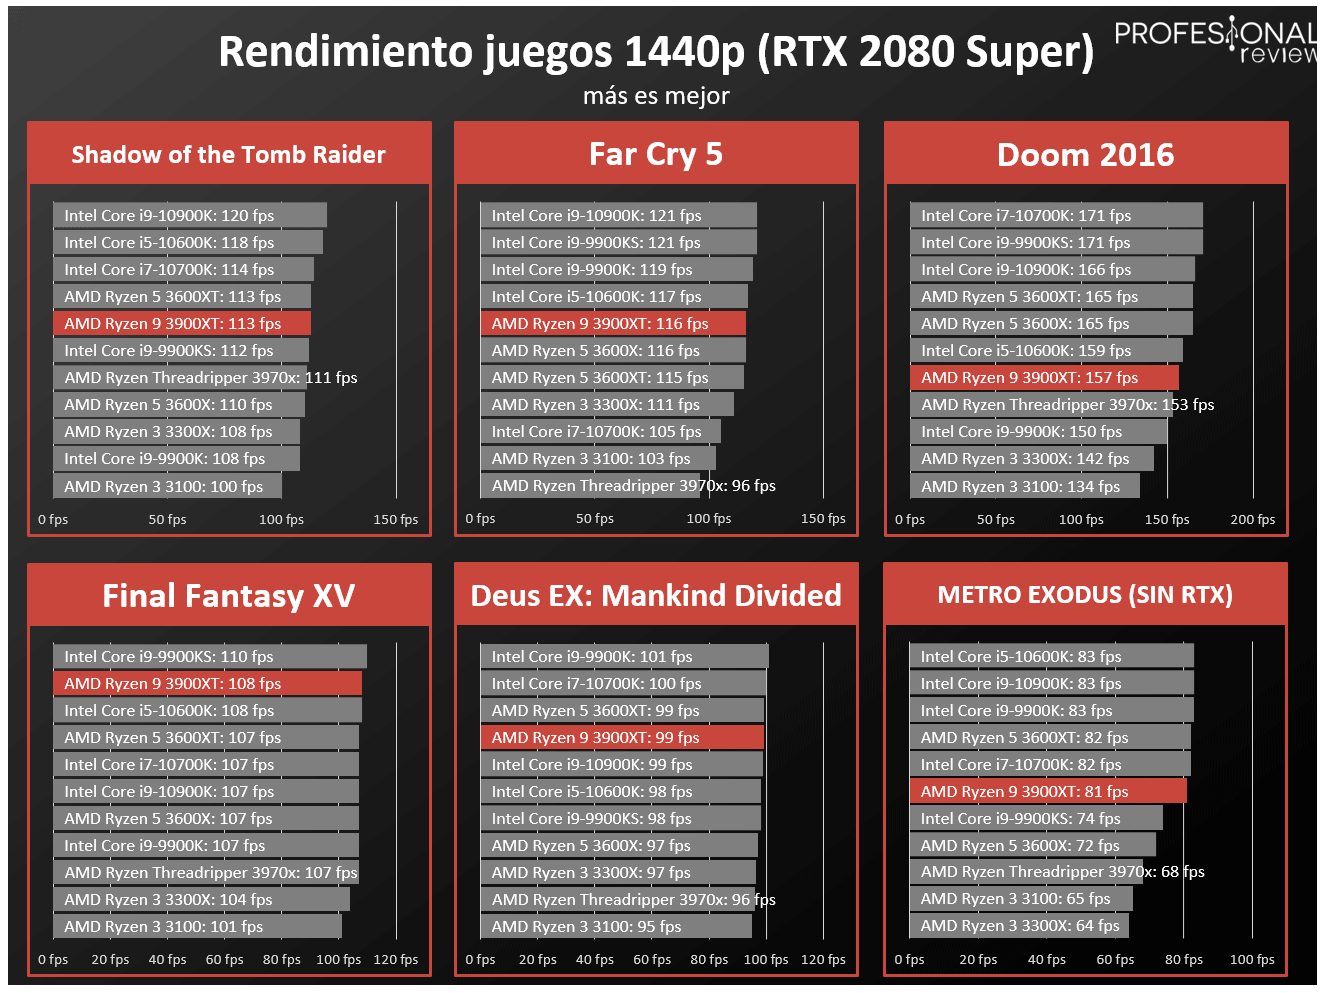 AMD Ryzen 9 3900XT Review